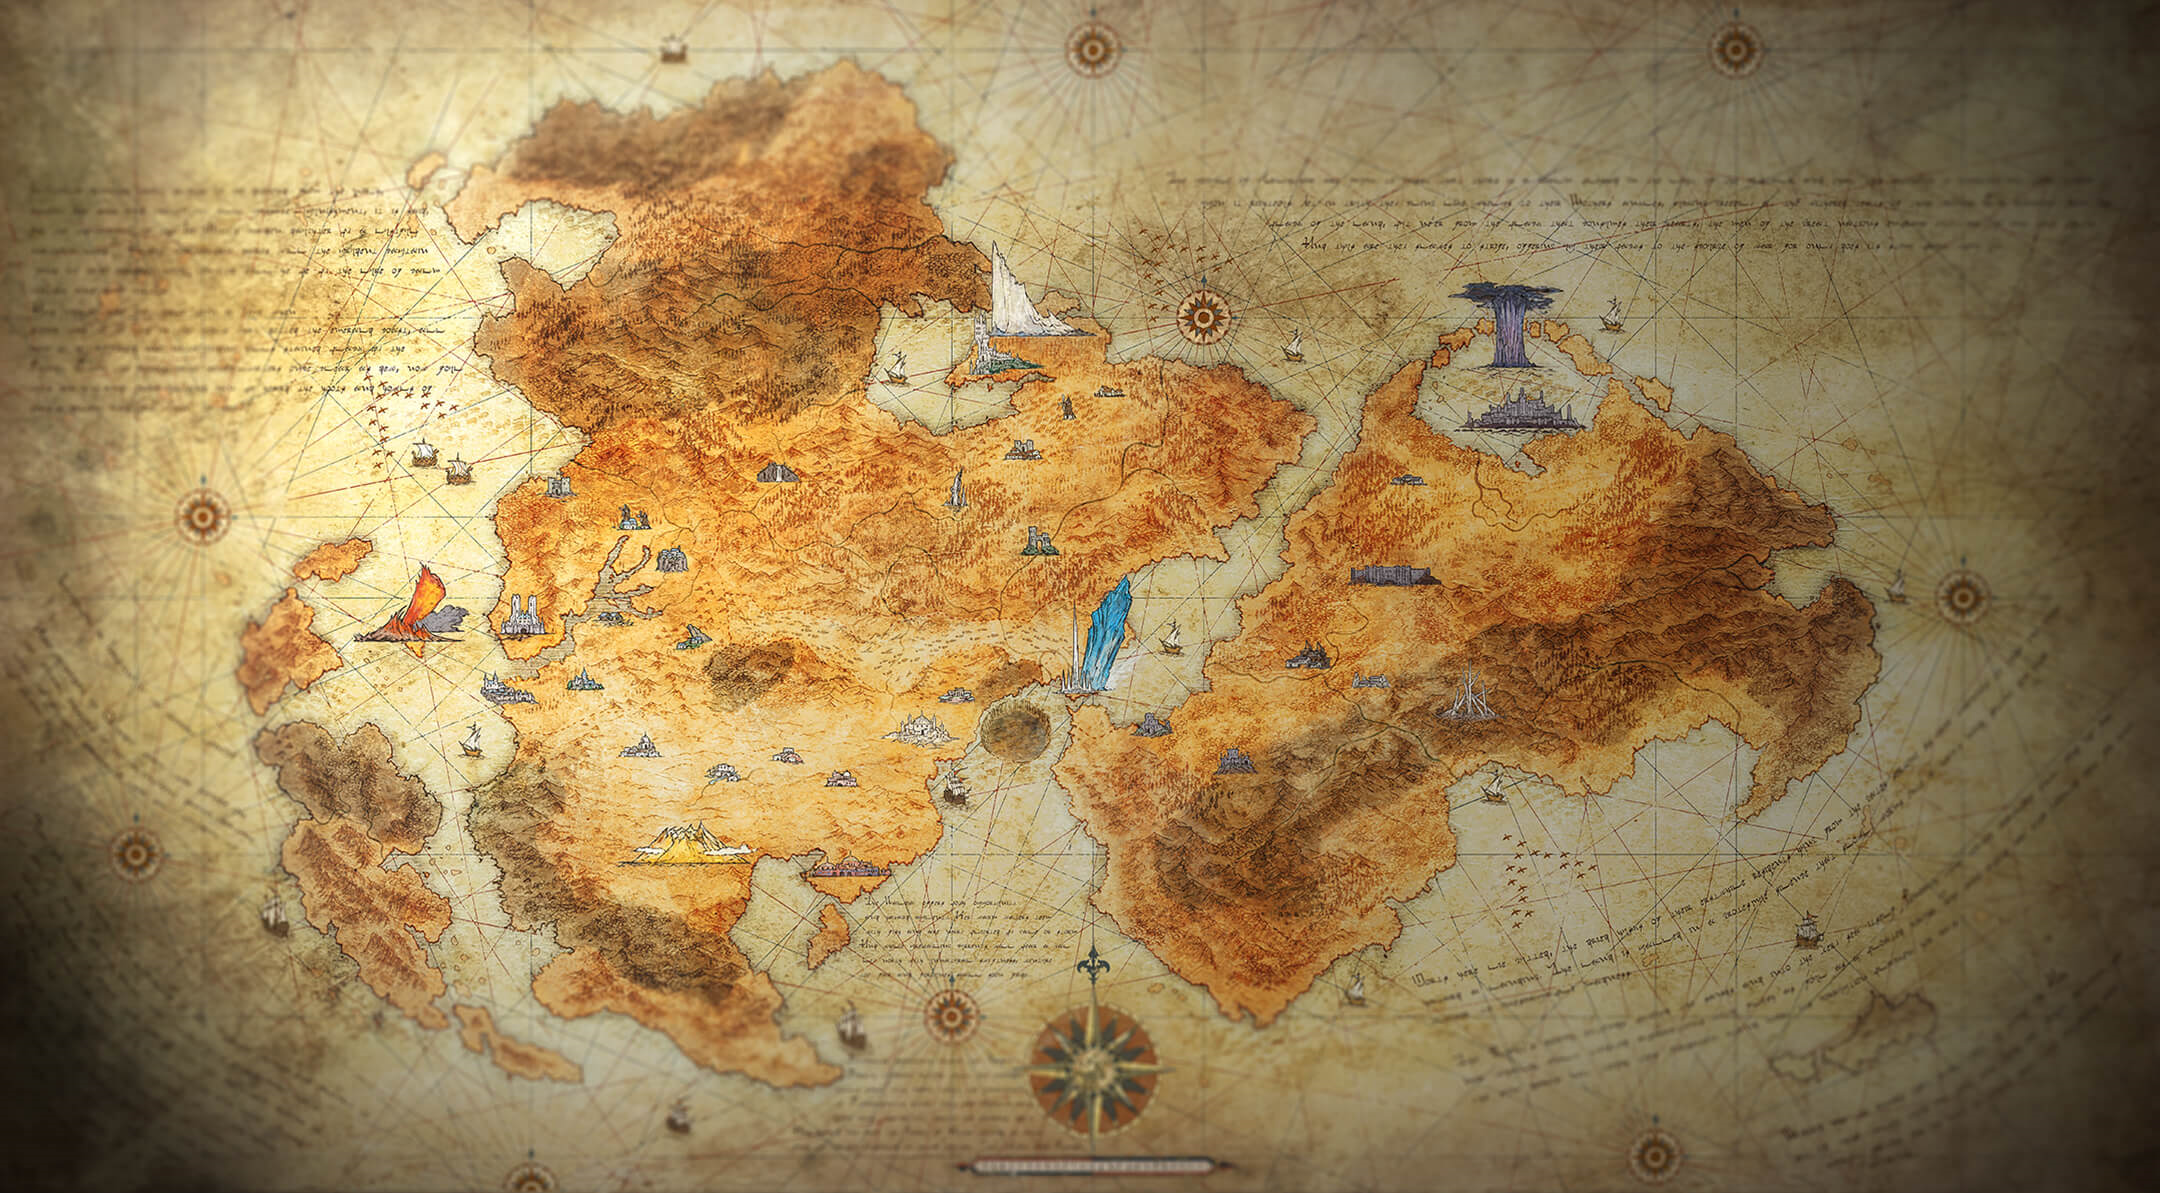 Final Fantasy Games, Ranked - Where Does Final Fantasy 16 Land? - GameSpot